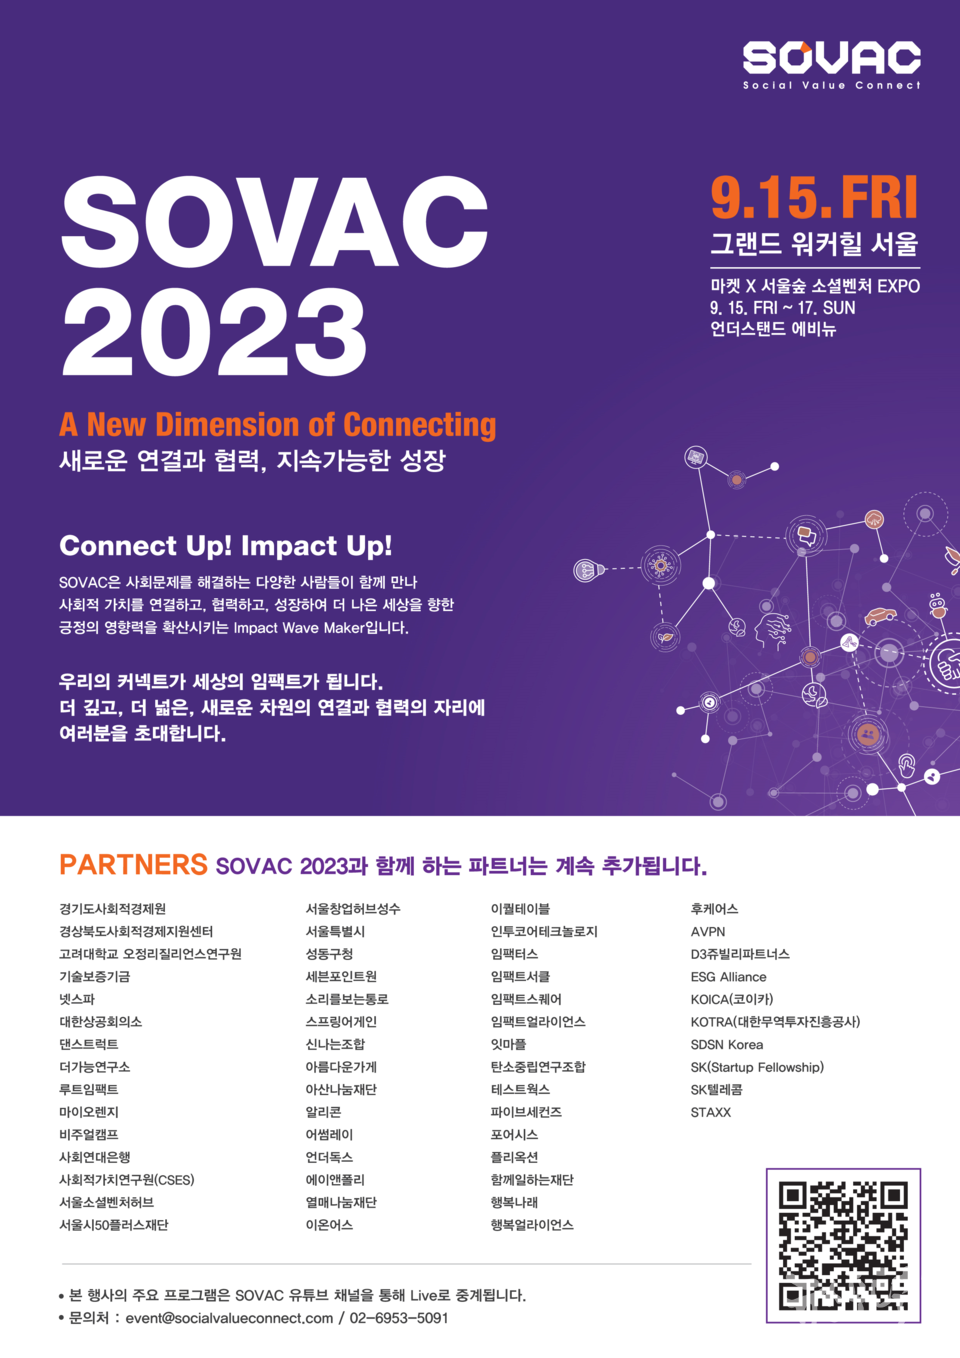 SOVAC 2023 행사 포스터/서울시 제공